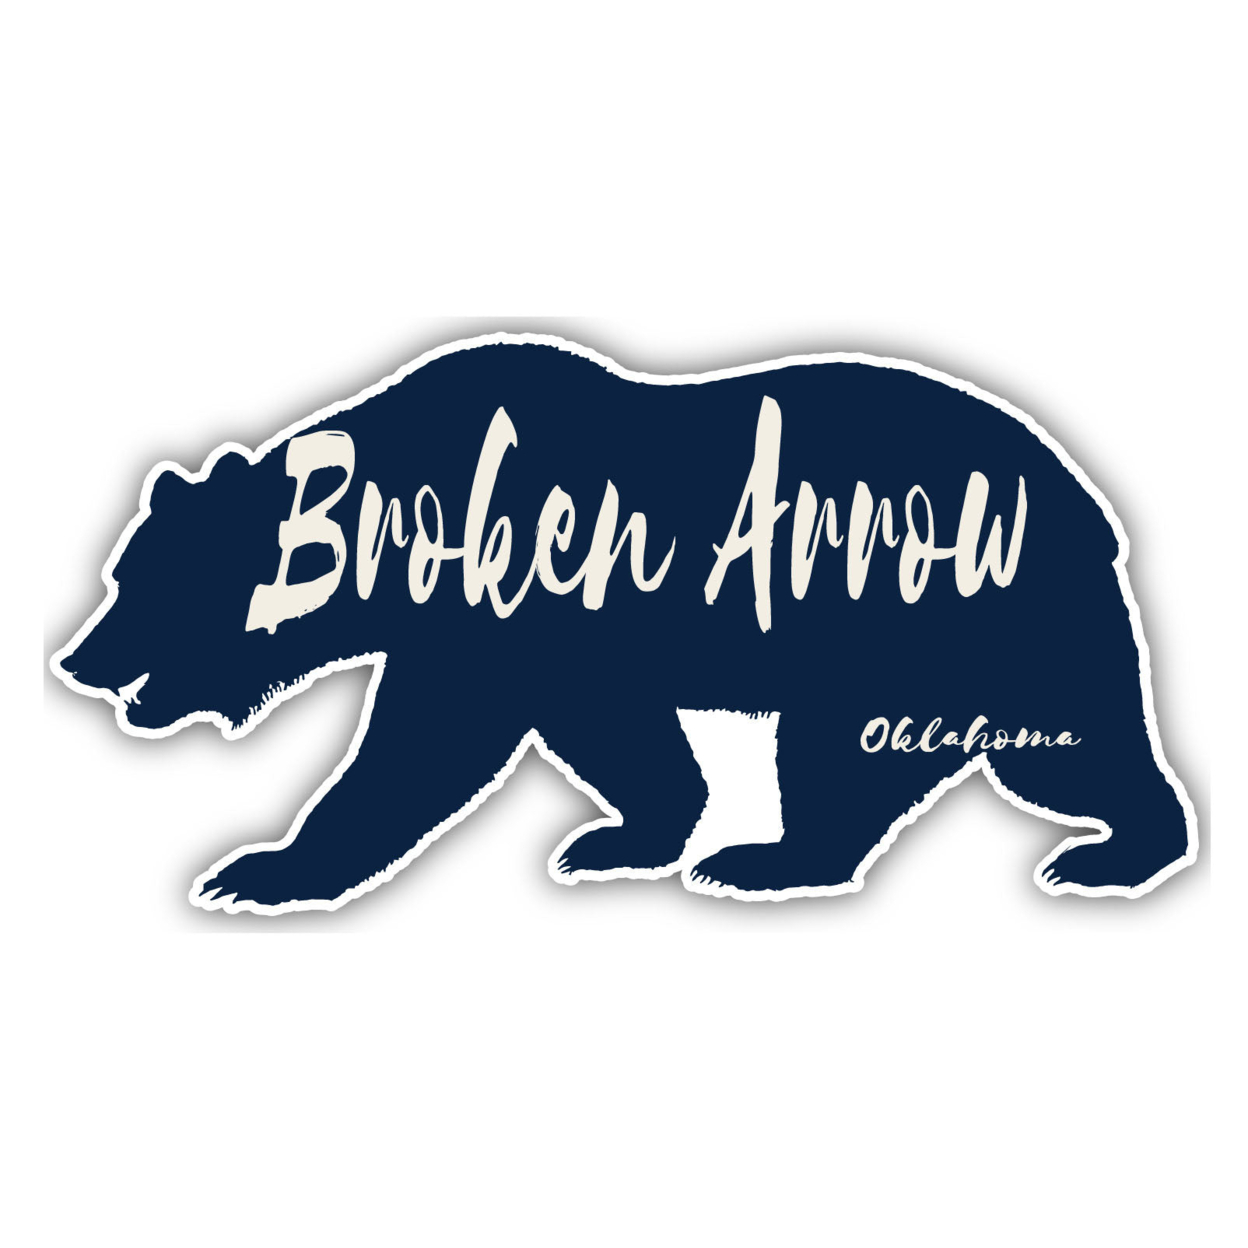 Broken Arrow Oklahoma Souvenir Decorative Stickers (Choose Theme And Size) - Single Unit, 8-Inch, Bear